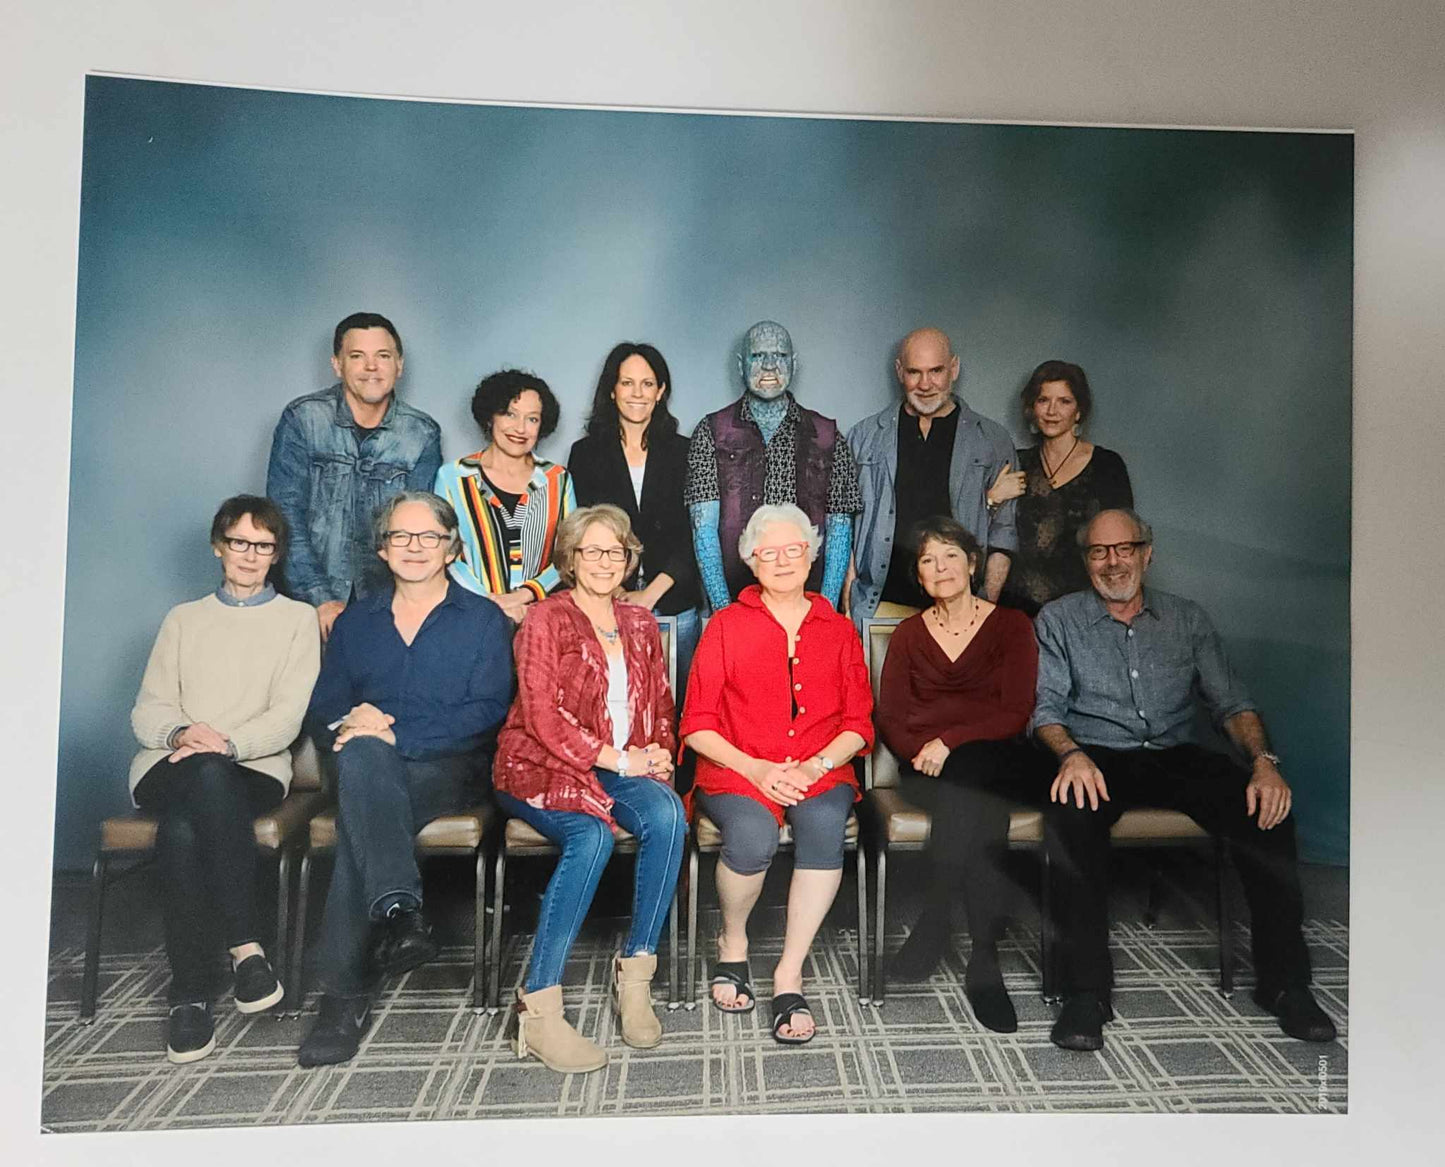 8"x10" Photo - -Group X-Files Cast photo A